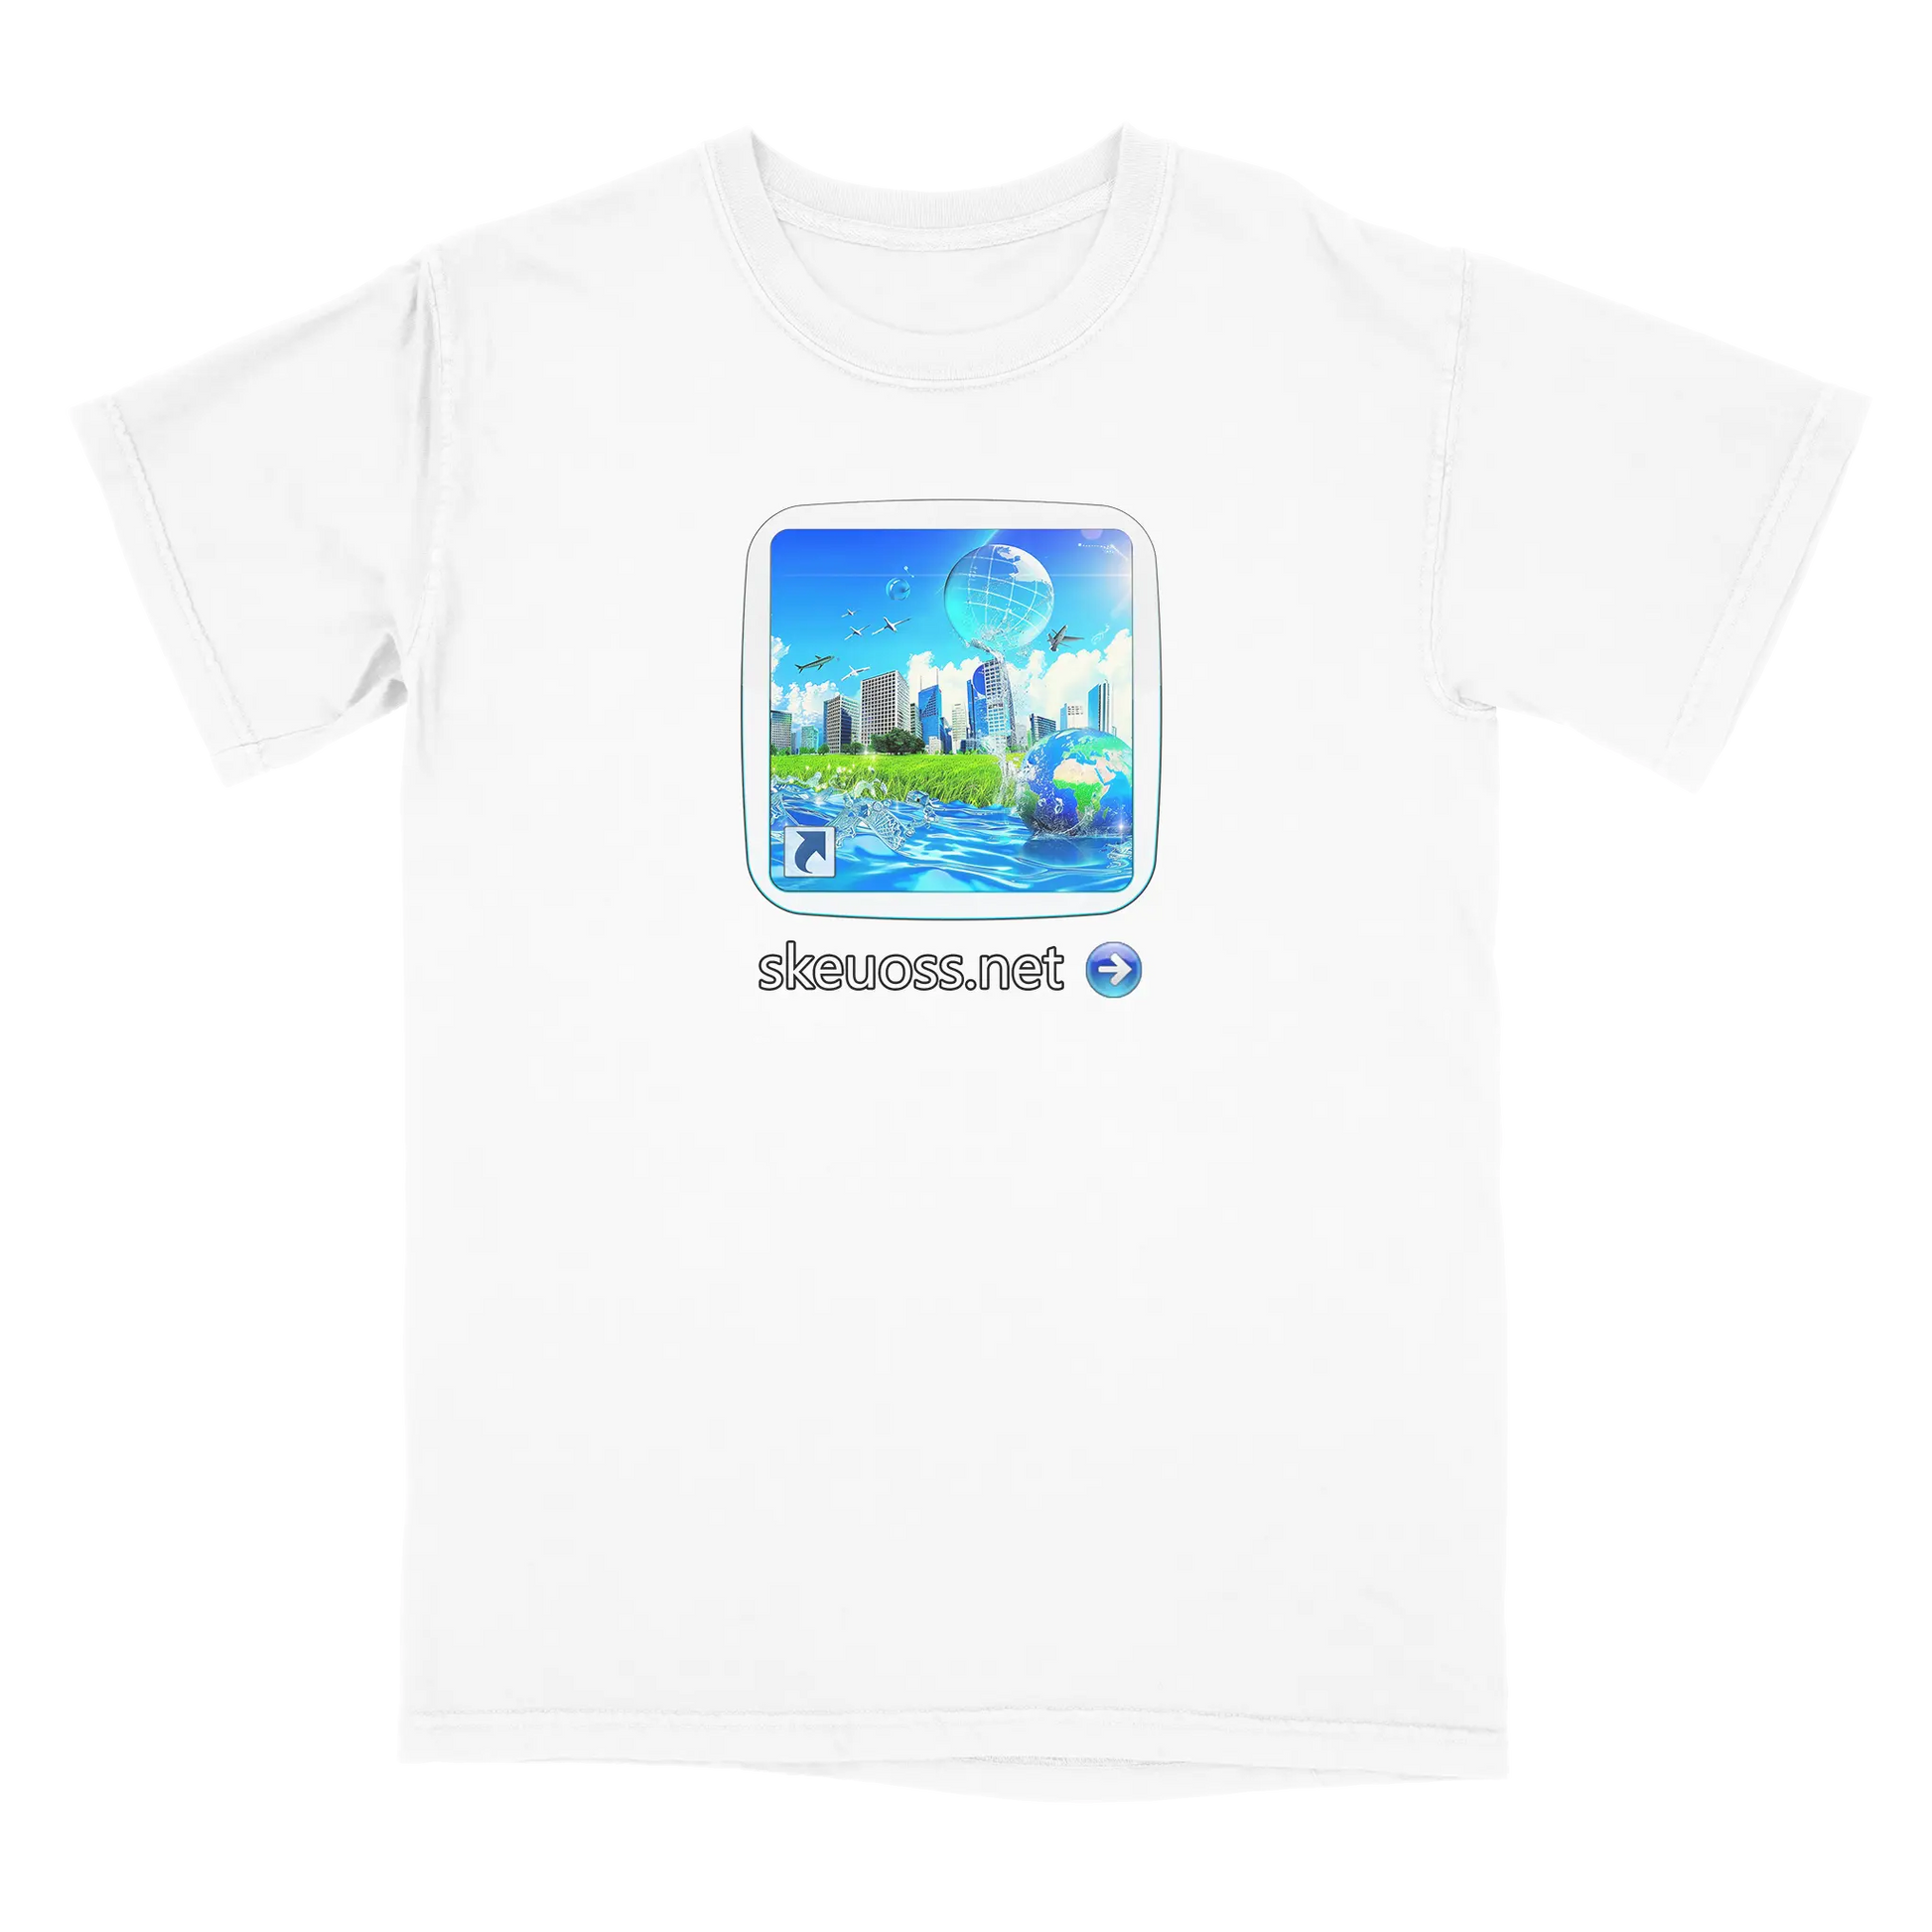 Frutiger Aero T-shirt - User Login Collection - User 368